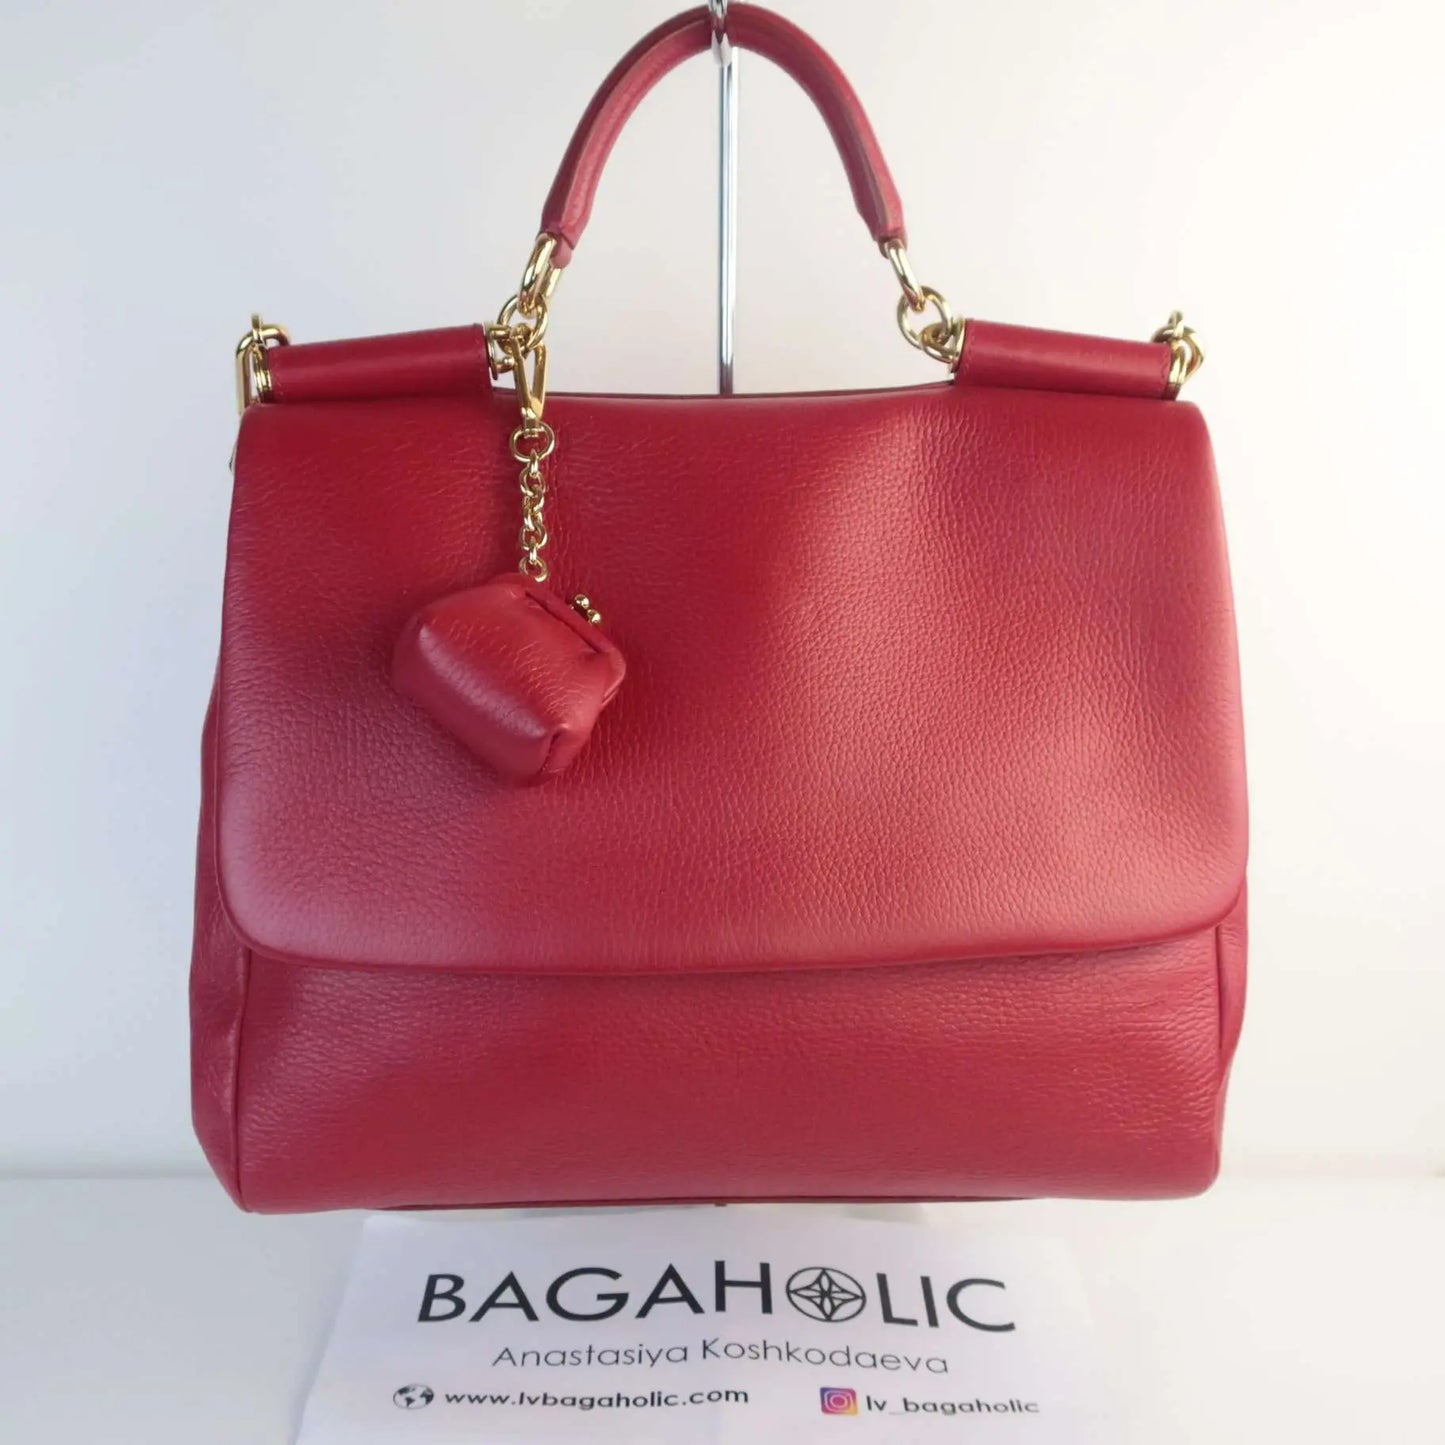 Dolce Gabbana Dolce Gabbana Red Leather Soft Miss Sicily Bag LVBagaholic